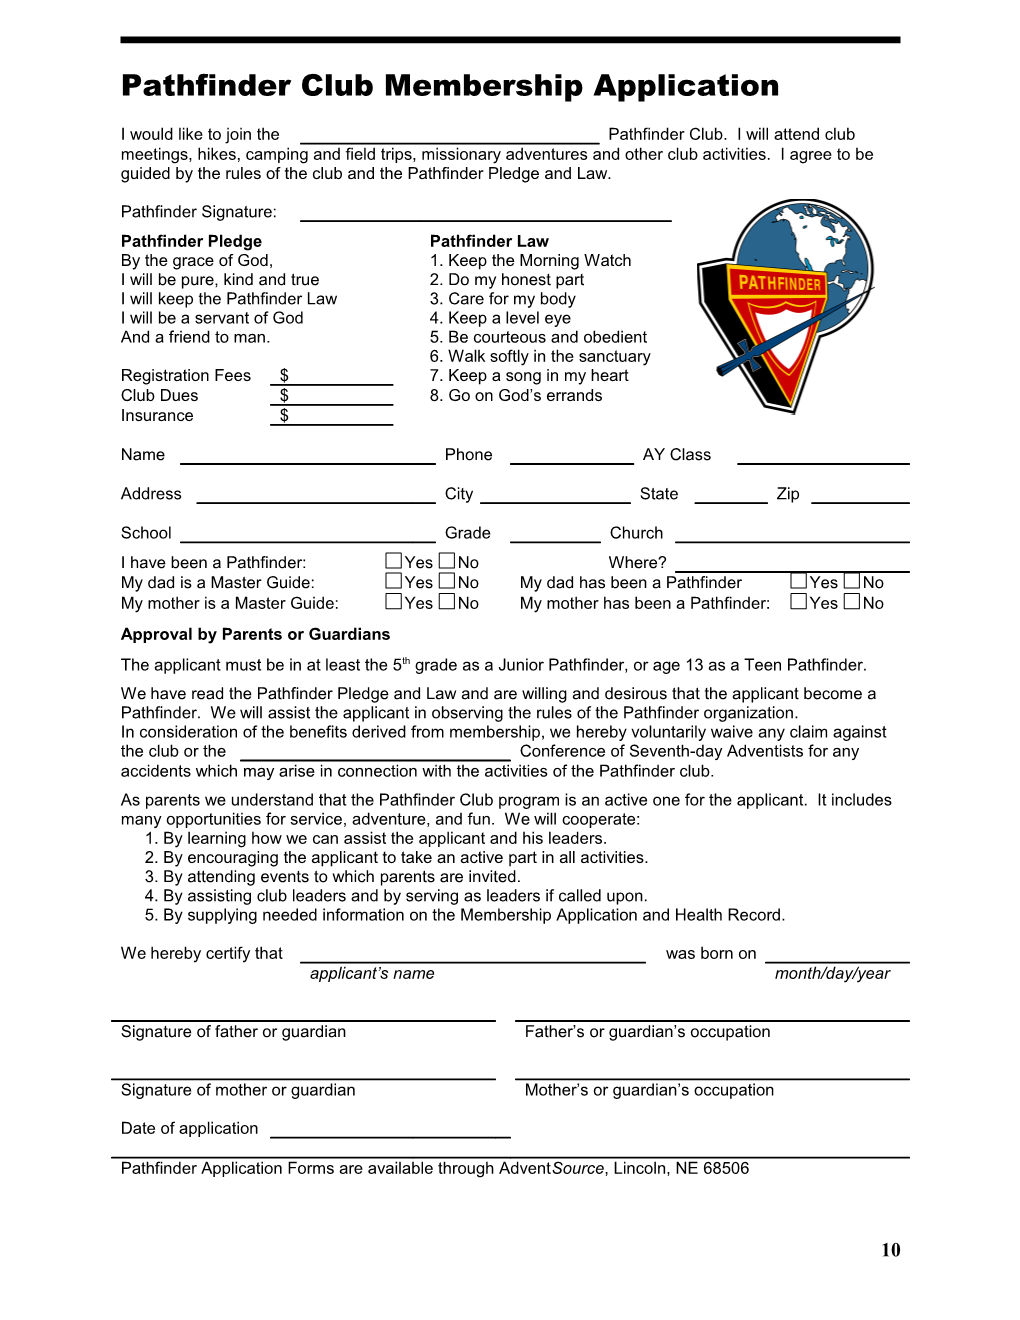 Pathfinder Club Membership Application